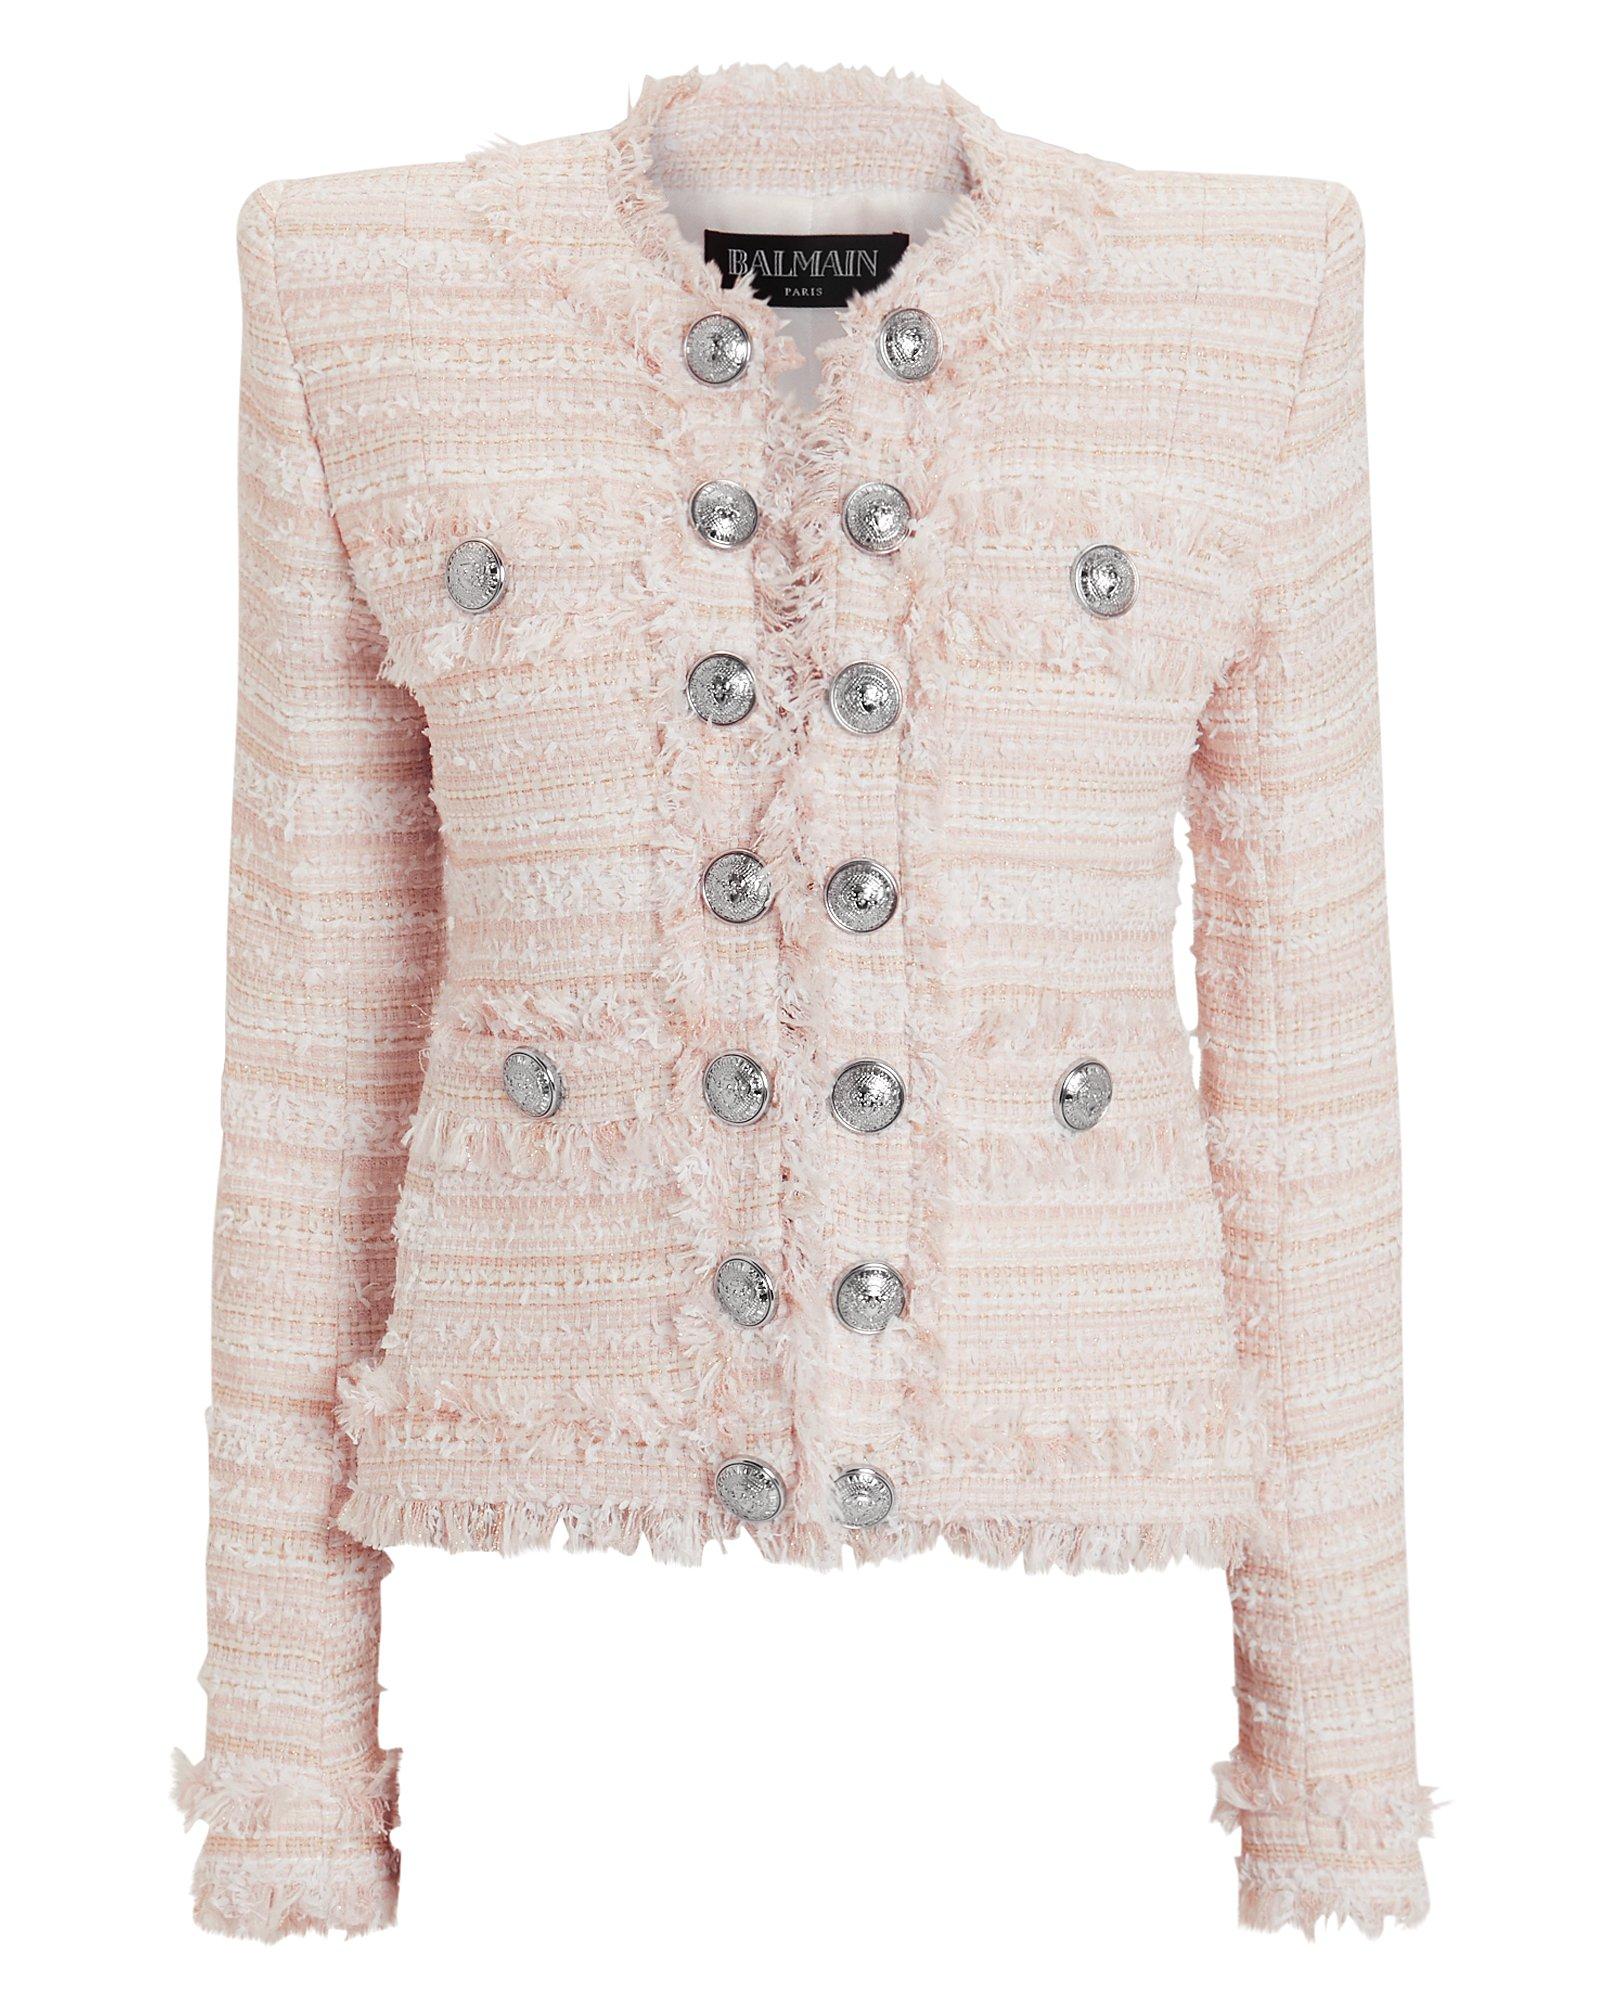 Balmain Fringe Trim Tweed Blazer in Pink - Lyst